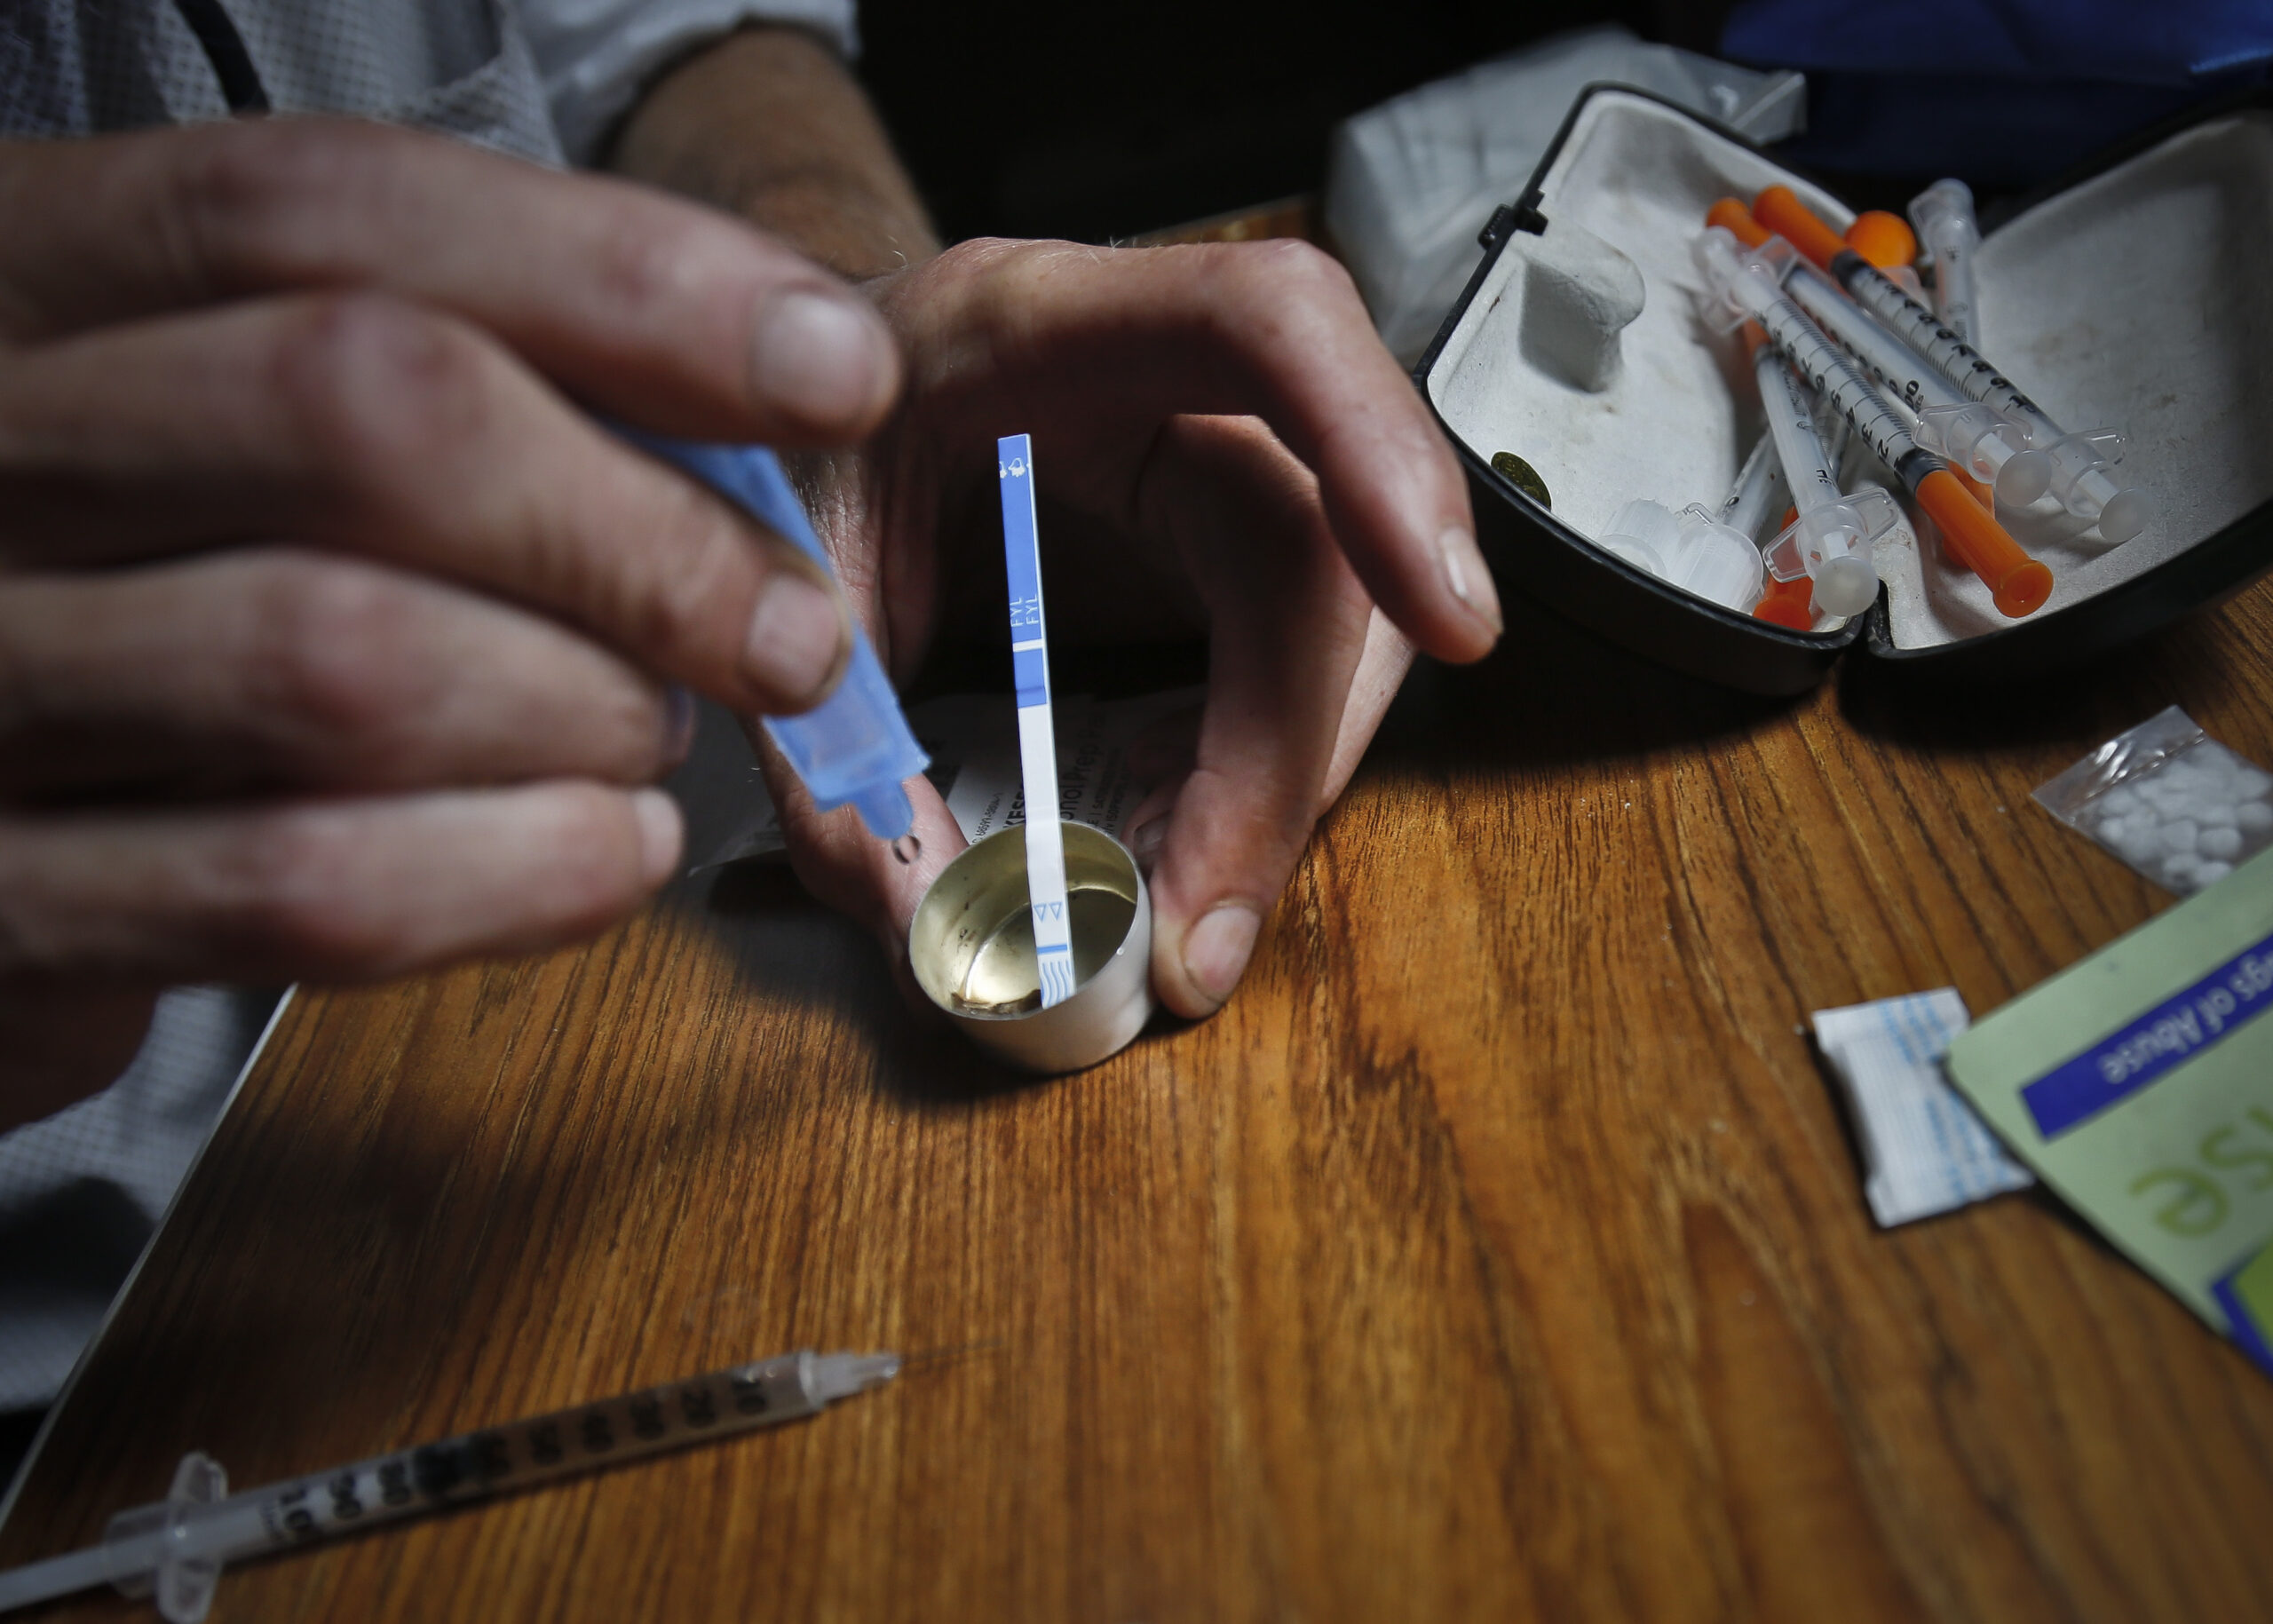 An addict prepares heroin